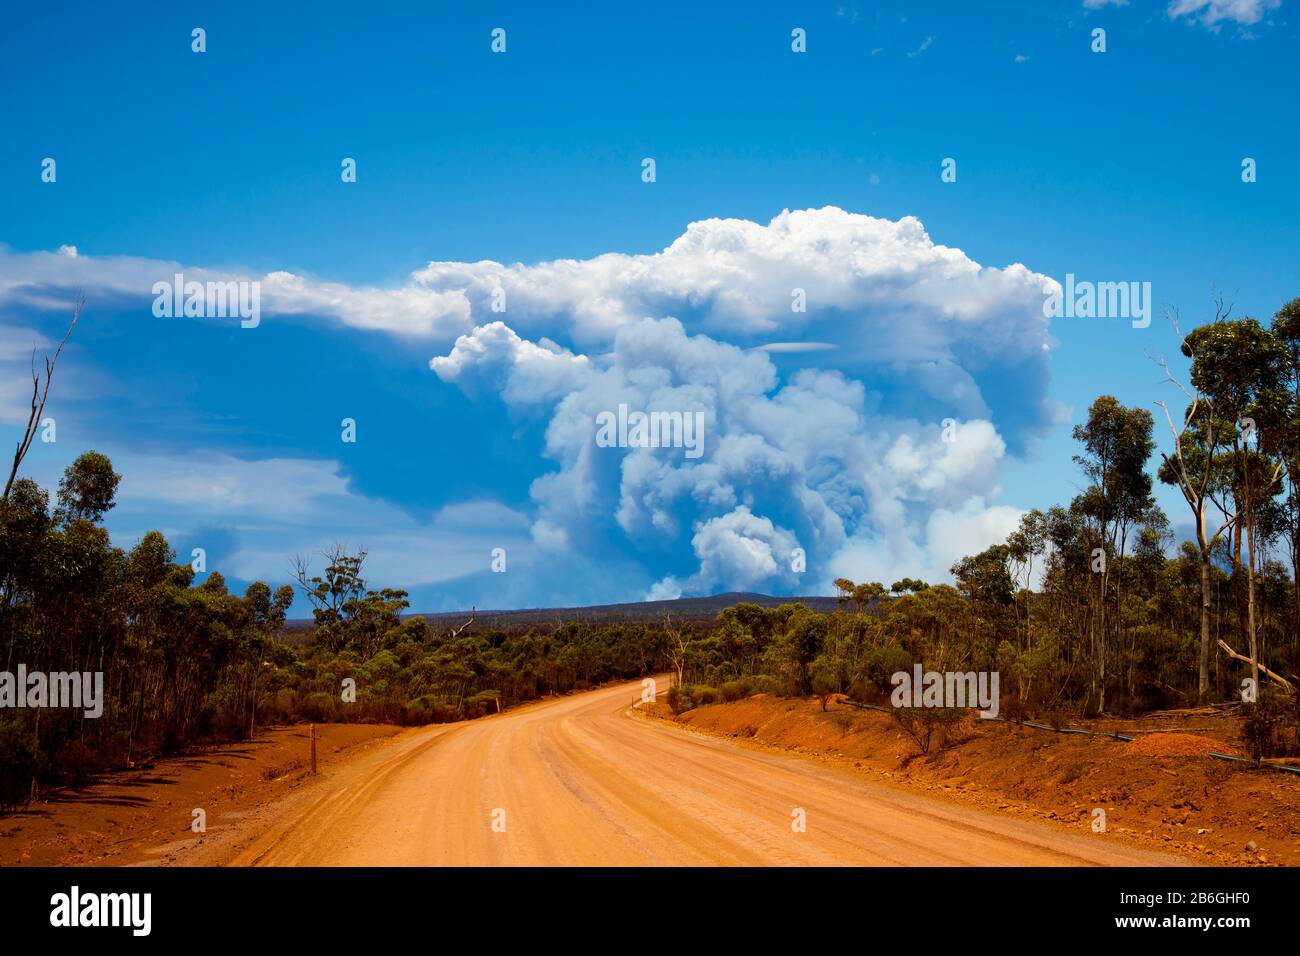 Bush Fires Smoke - Australia Stock Photo